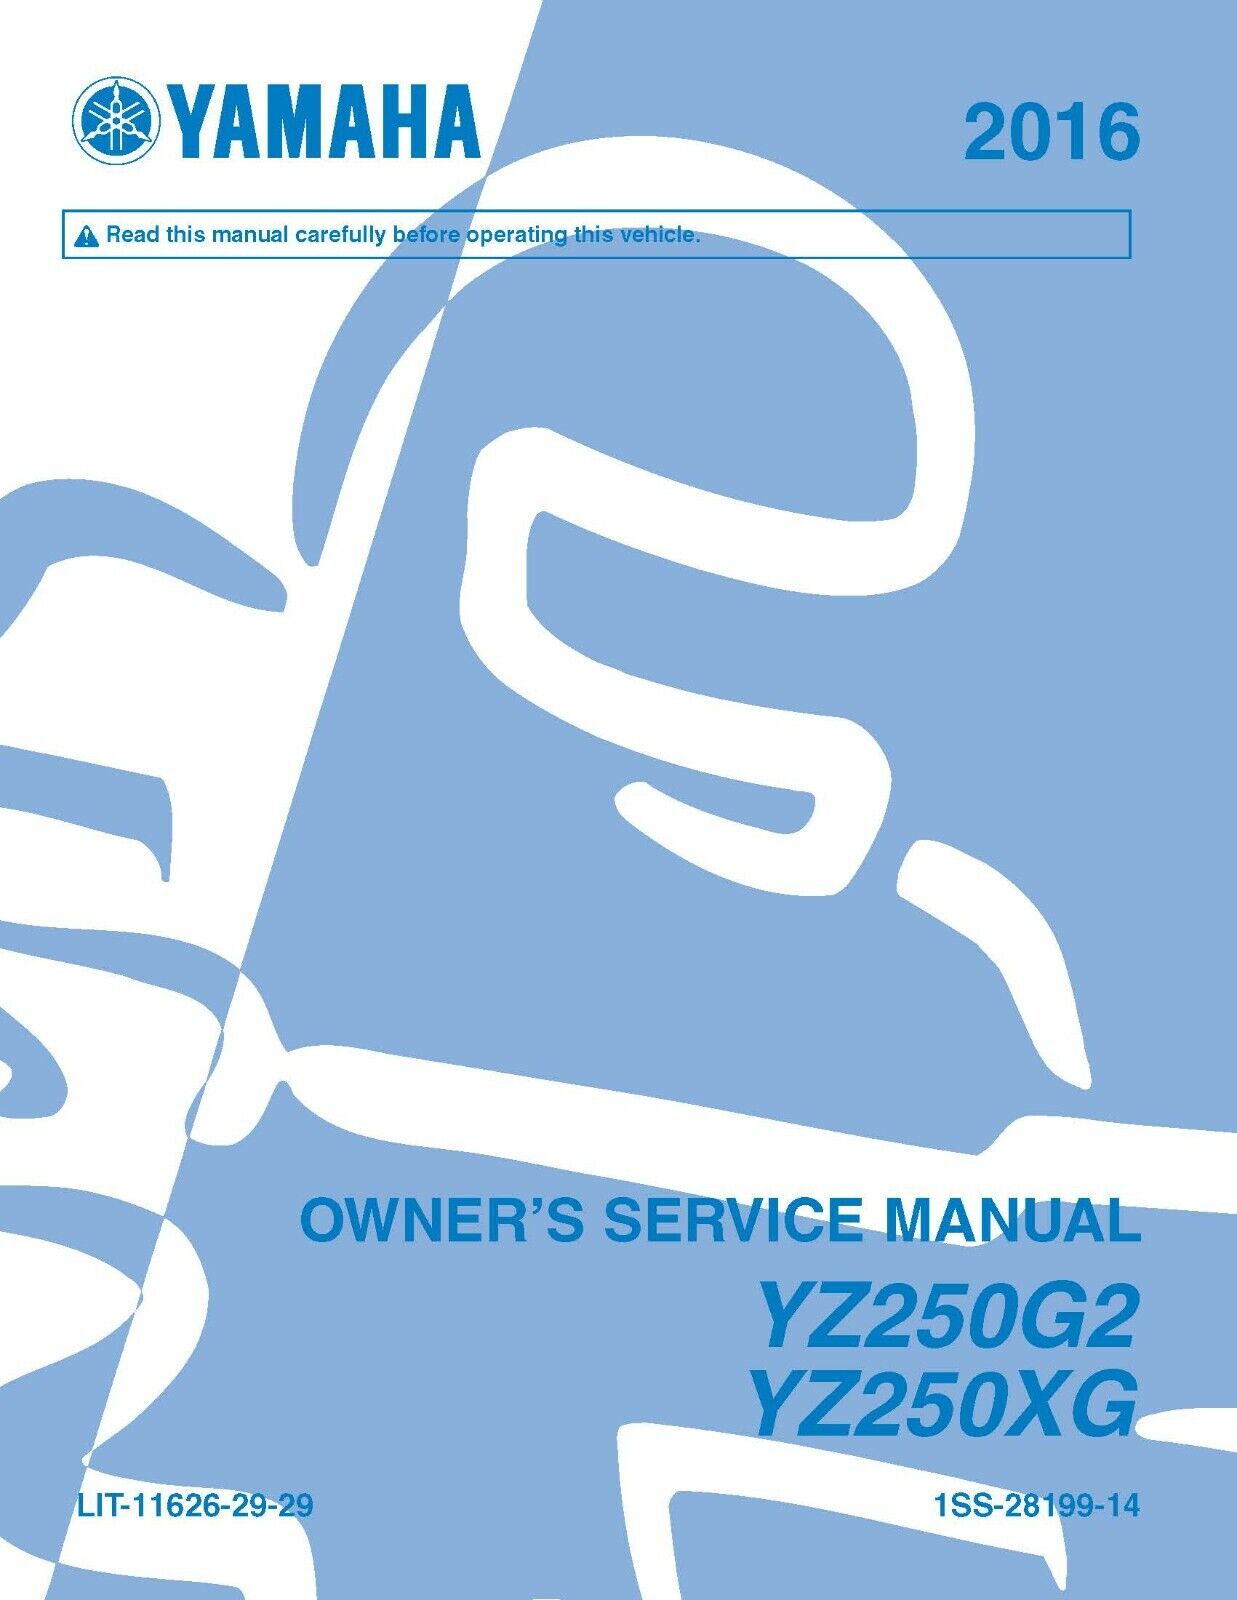 Yamaha owners service manual 2016 YZ250X YZ250XG | eBay